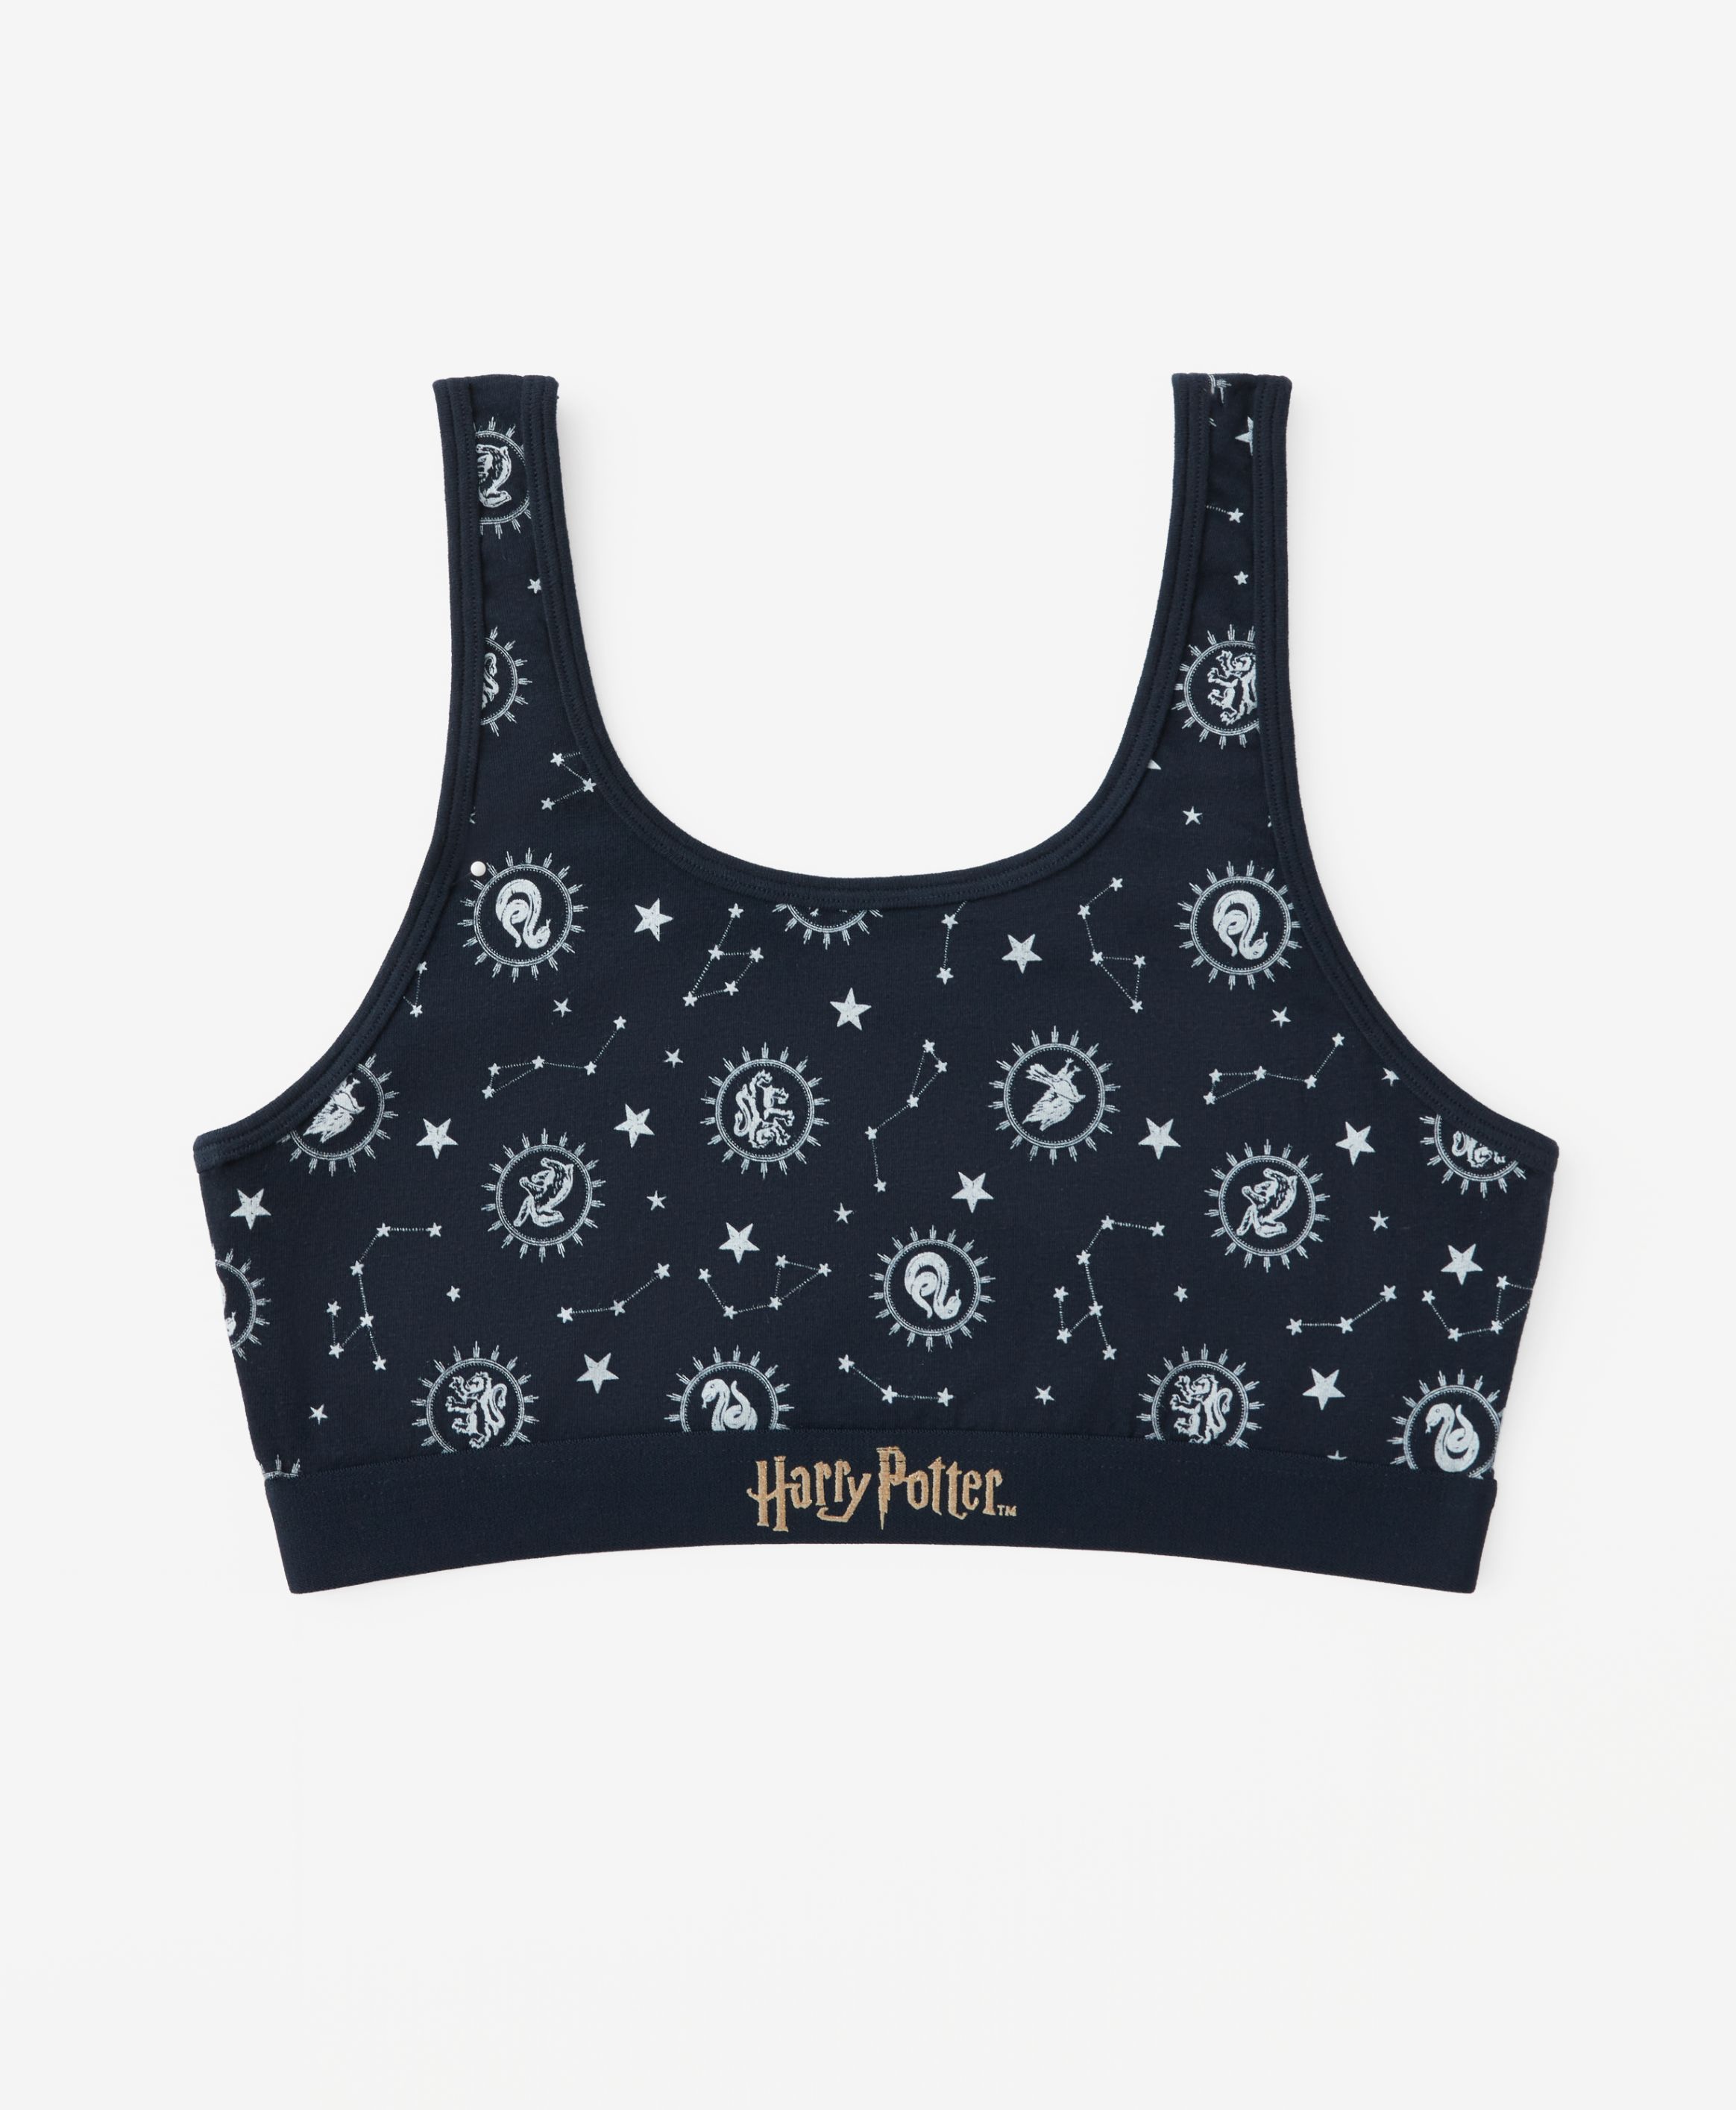 Pijama de Harry Potter - Pepco España